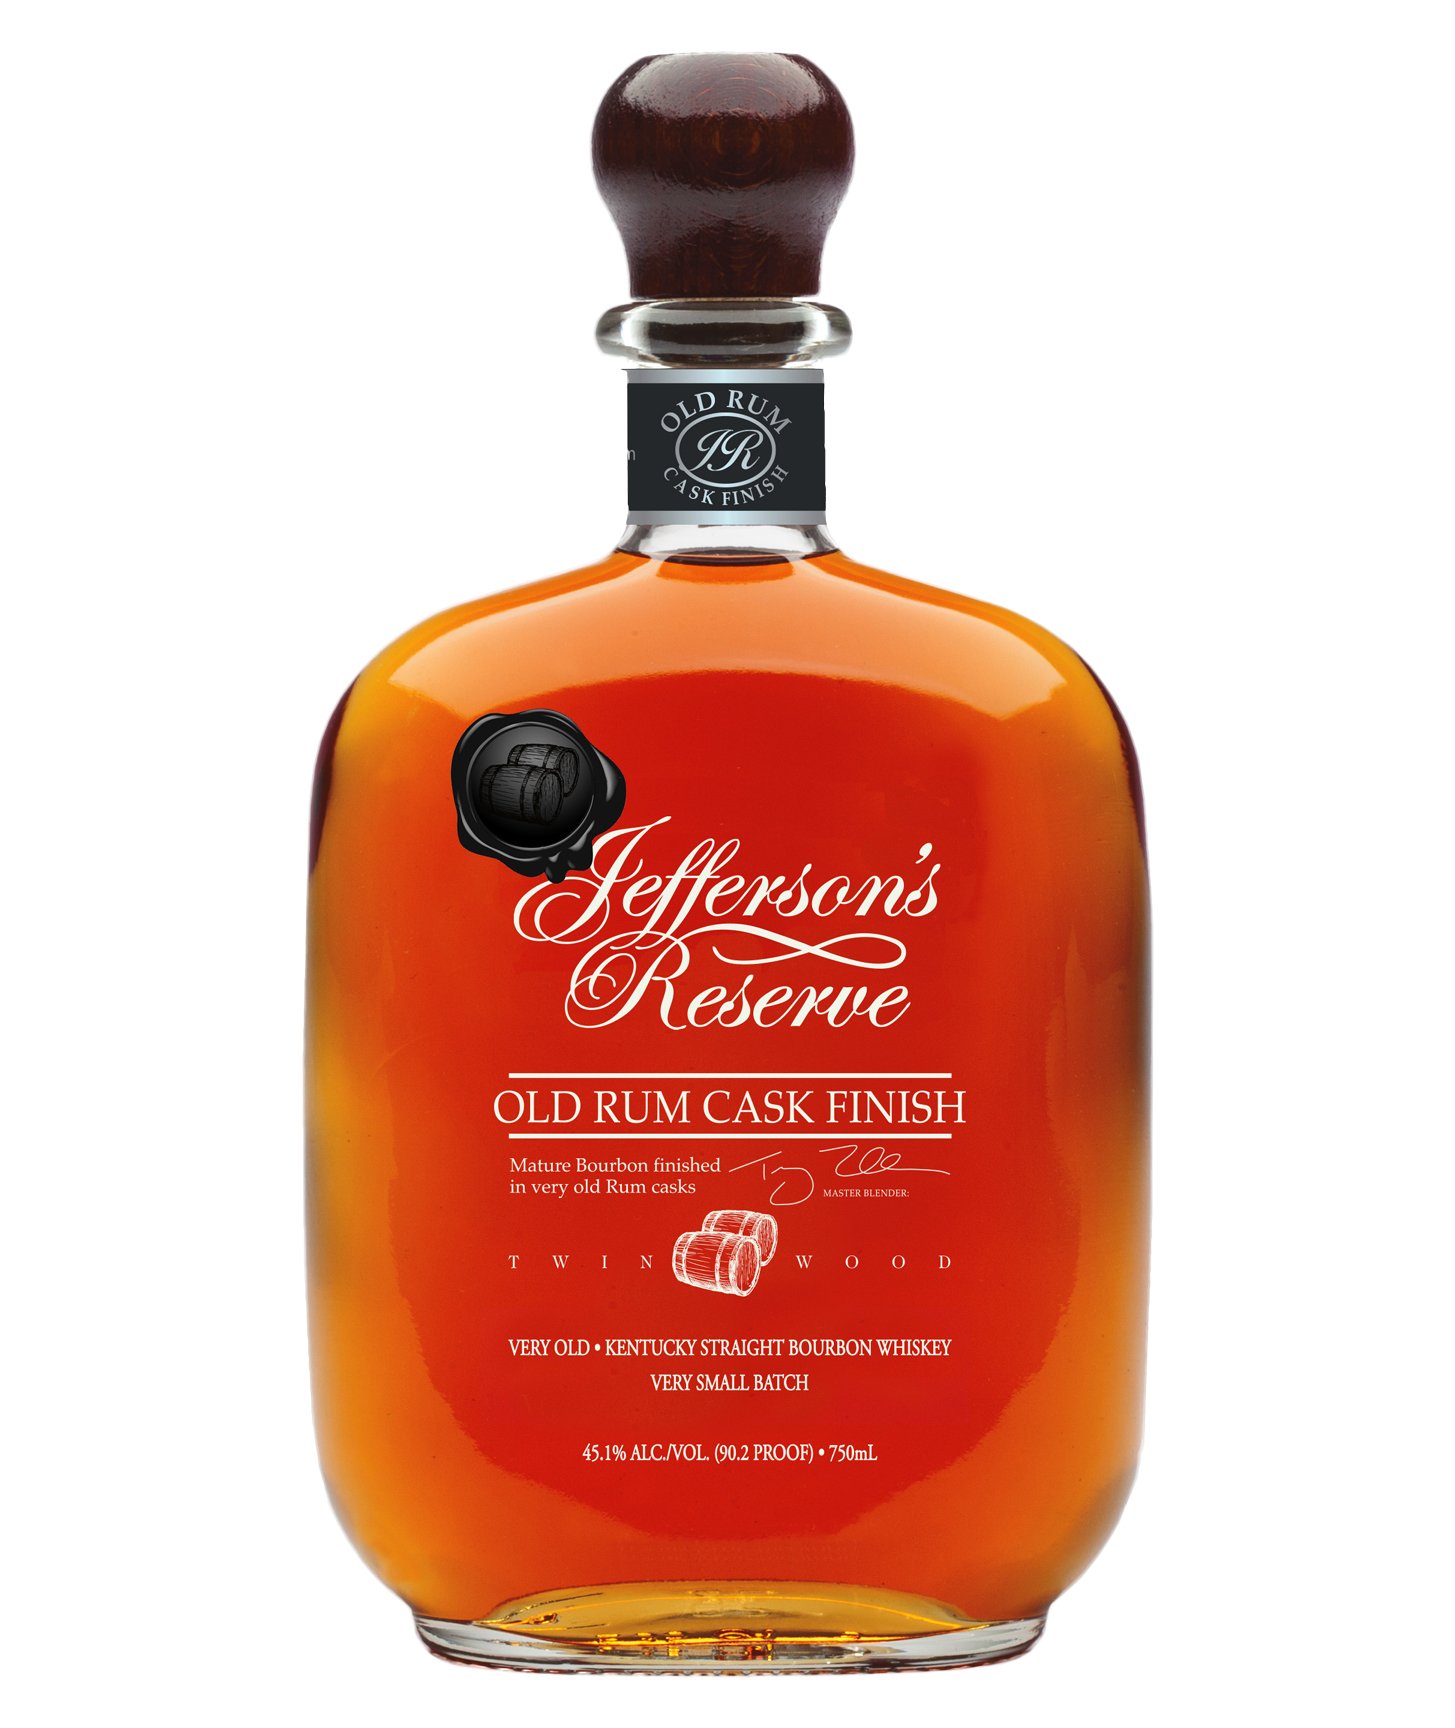 Jeffersons Reserve Old Rum Cask Finish Bourbon